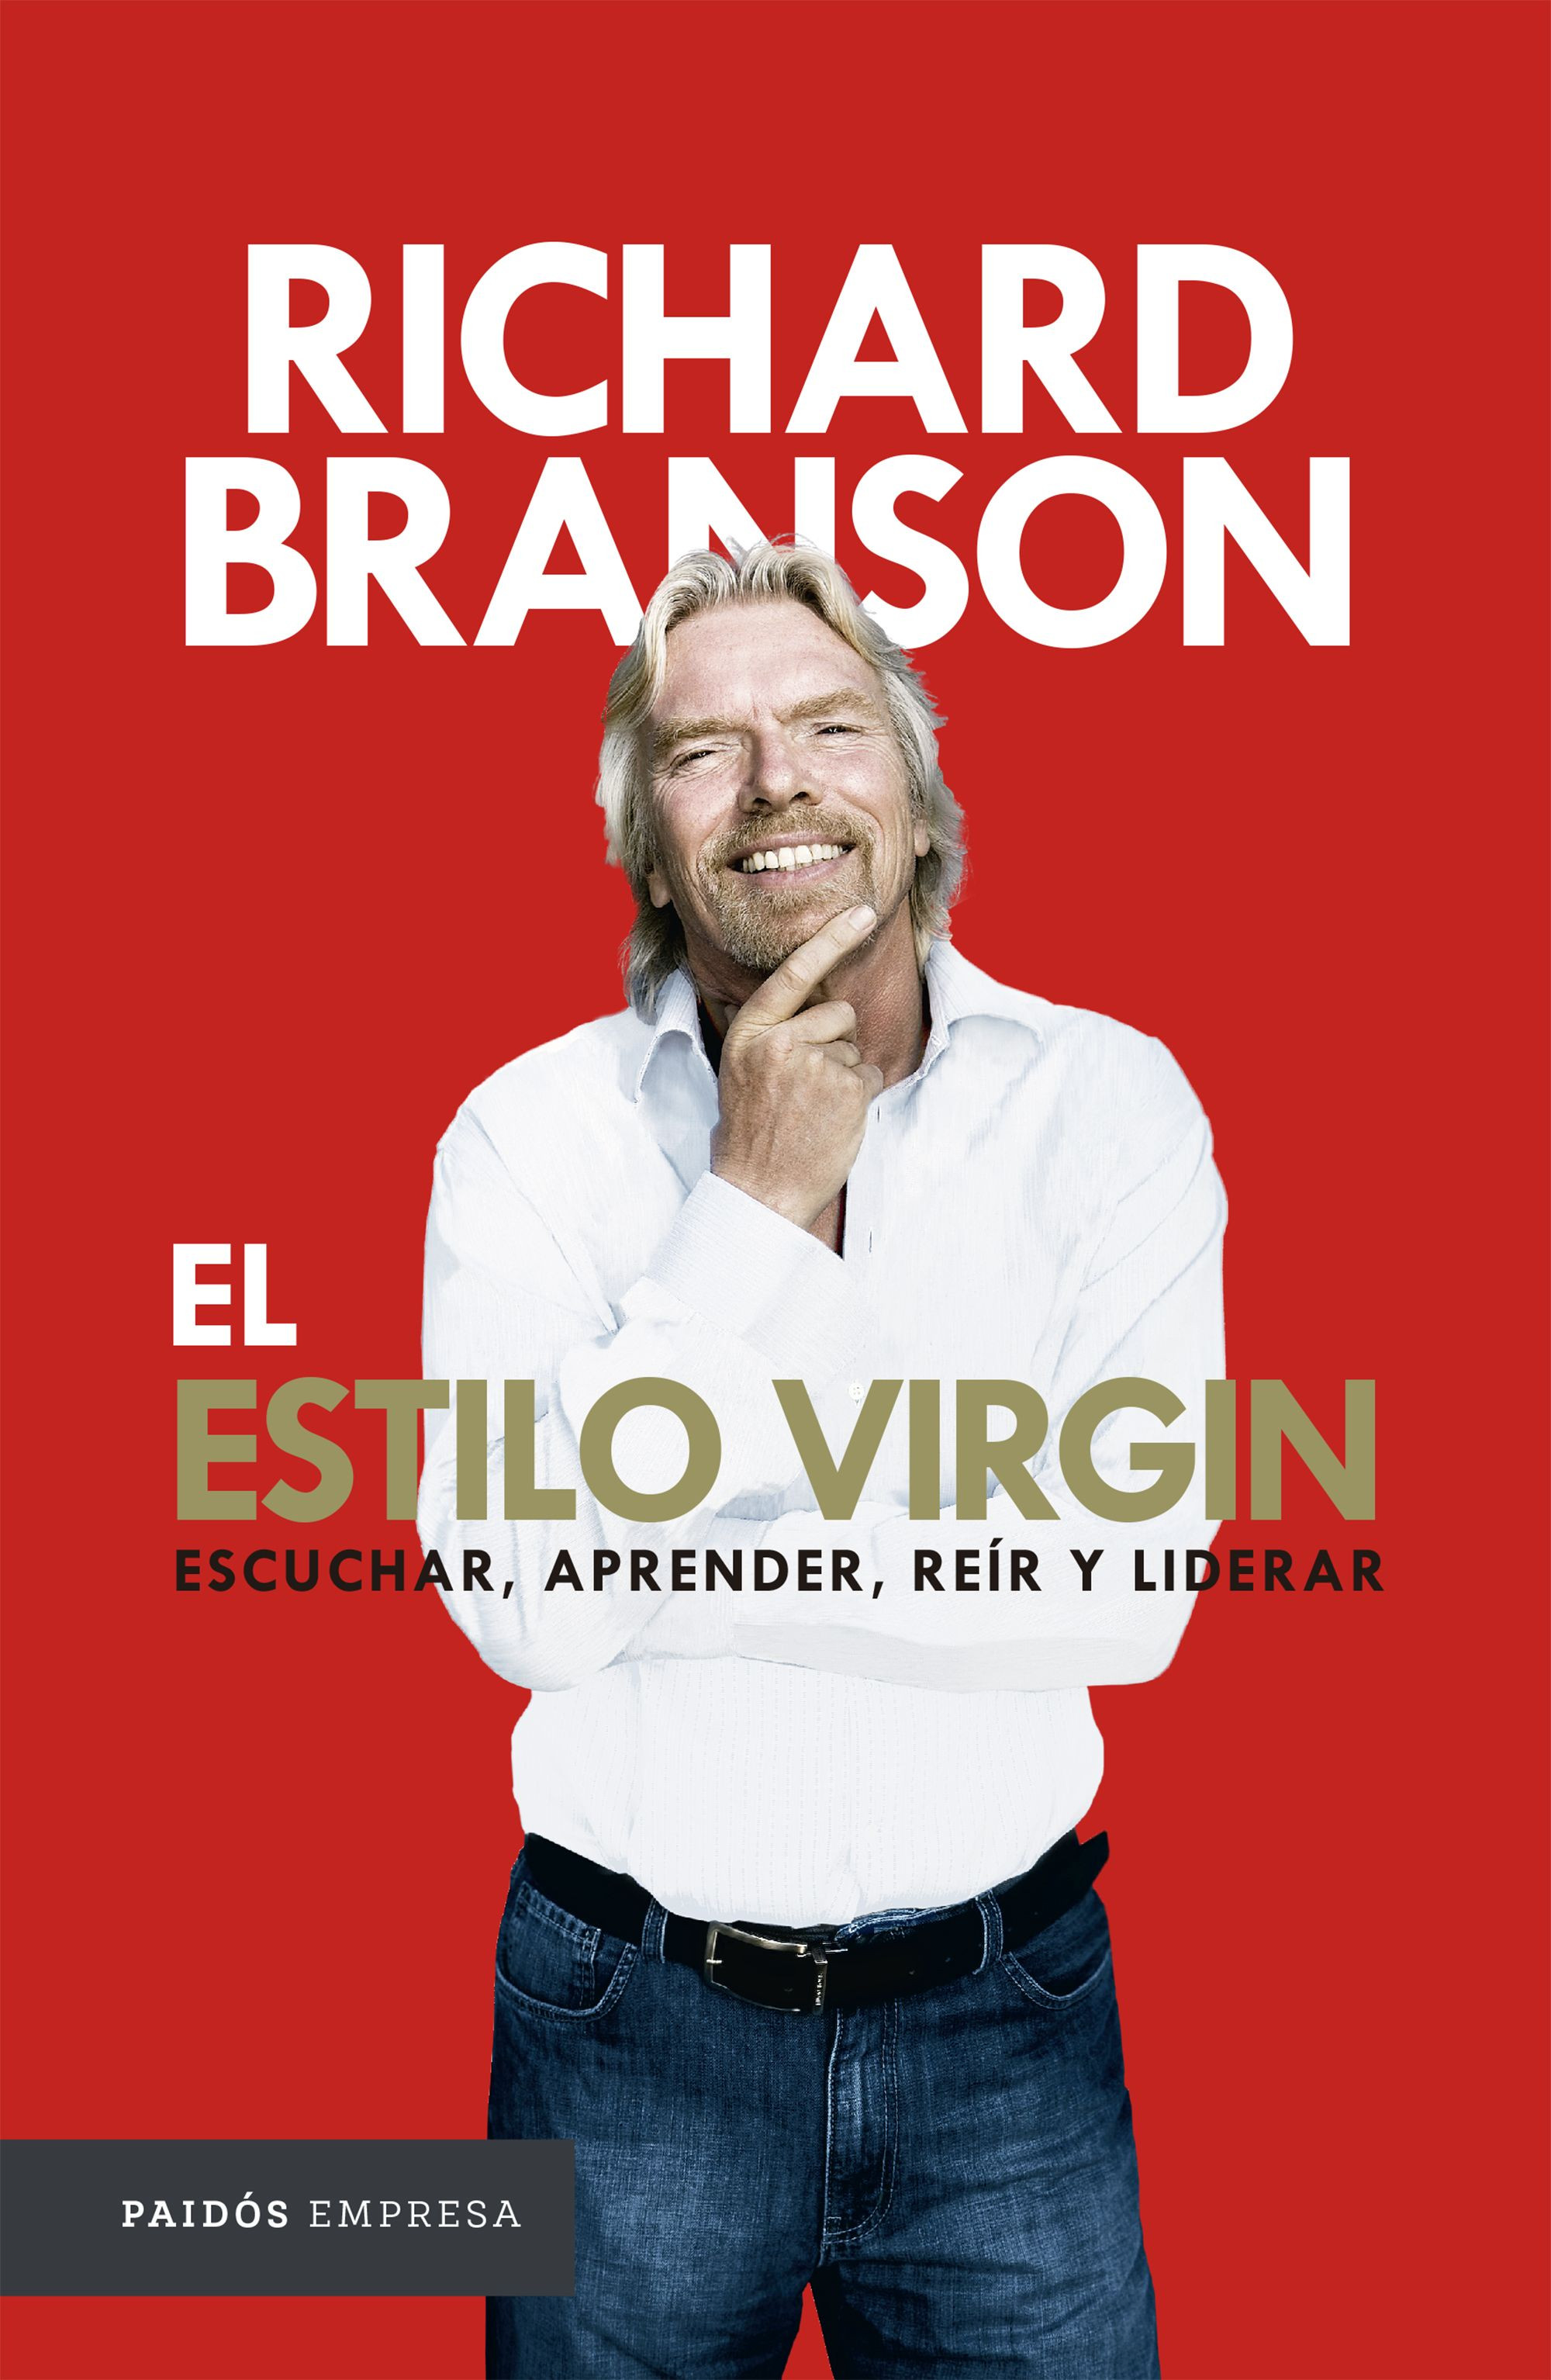 Imagen El estilo Virgin. Escuchar, aprender, reír y liderar. Richard Branson 1